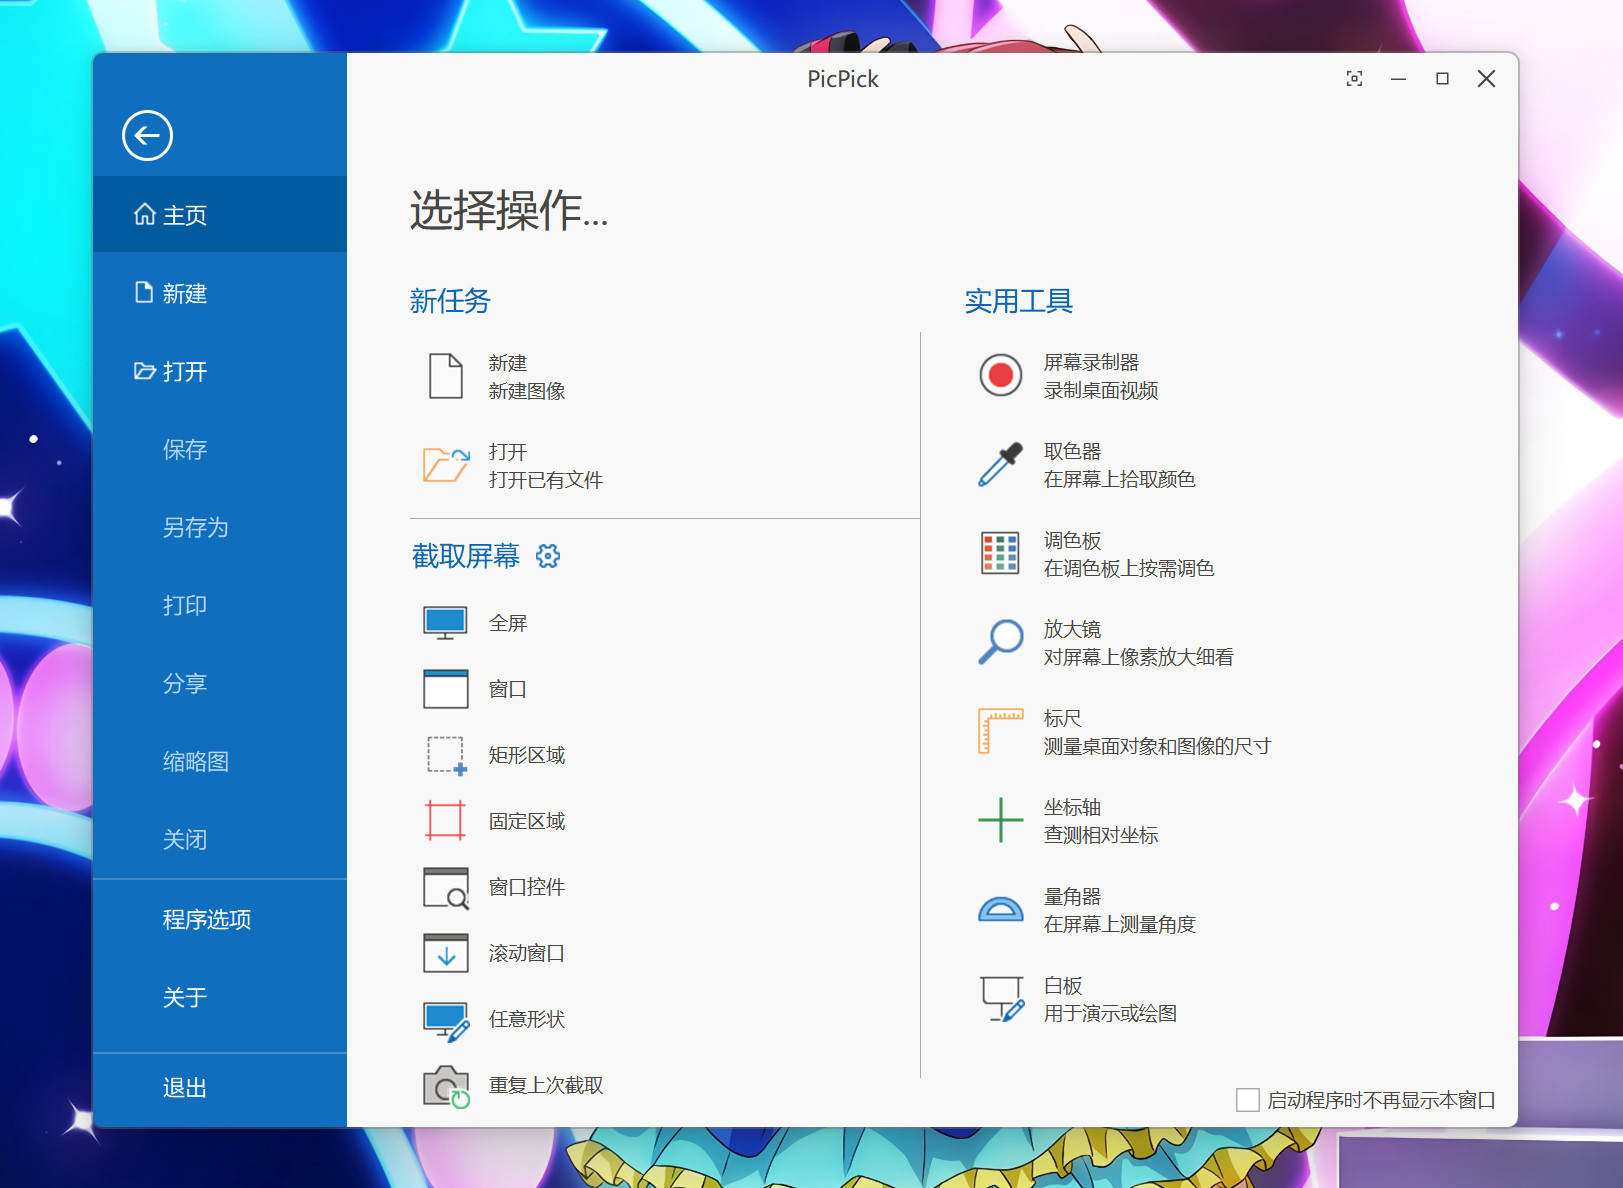 PicPick Professional (截图工具)v7.2.8中文免安装激活版